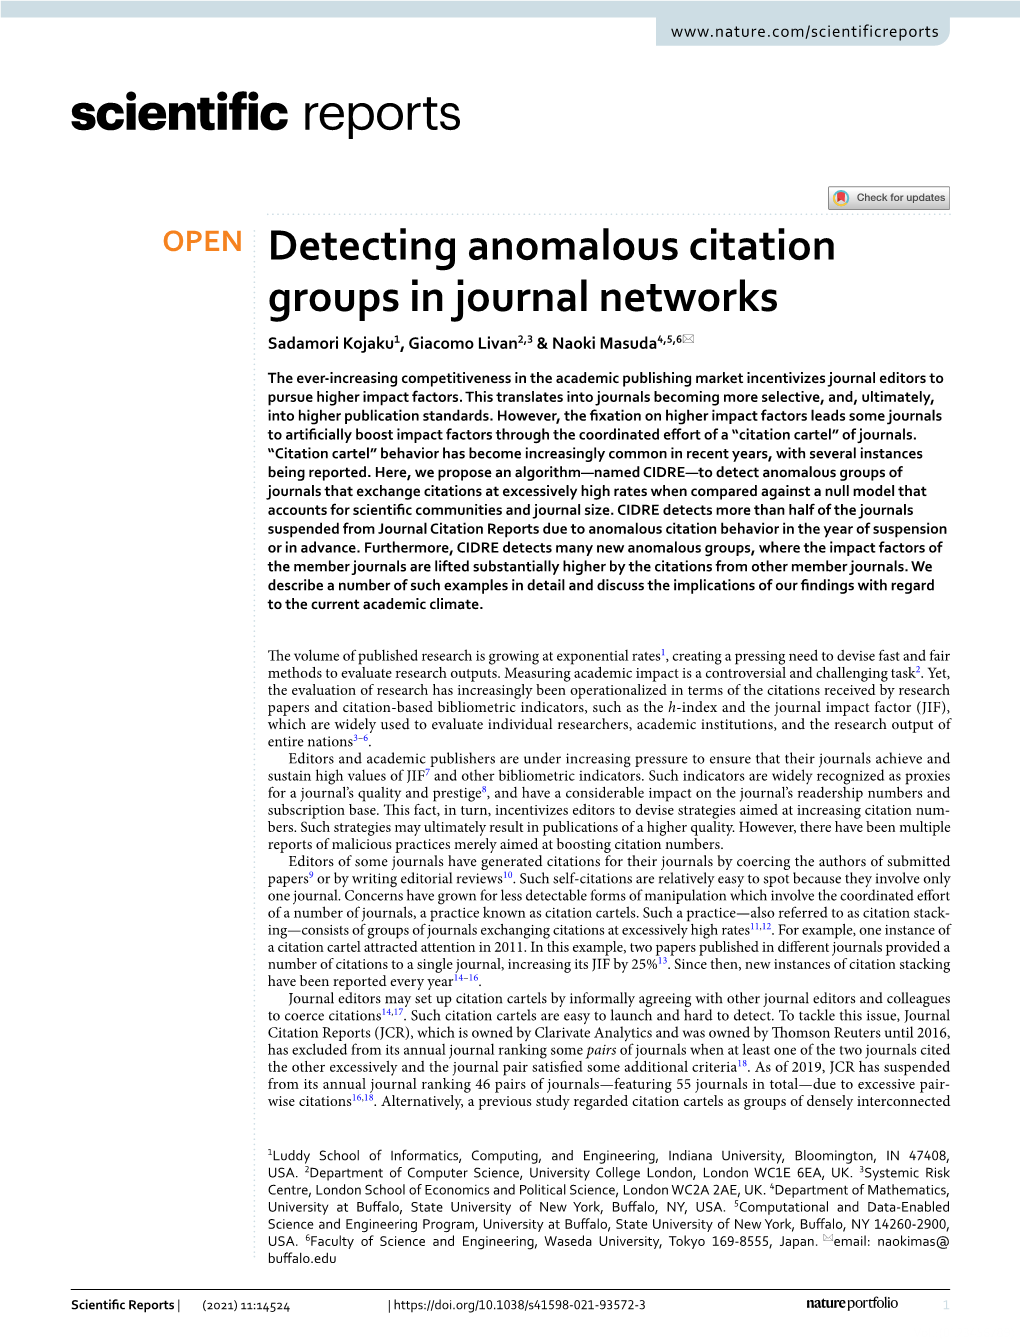 Detecting Anomalous Citation Groups in Journal Networks Sadamori Kojaku1, Giacomo Livan2,3 & Naoki Masuda4,5,6*